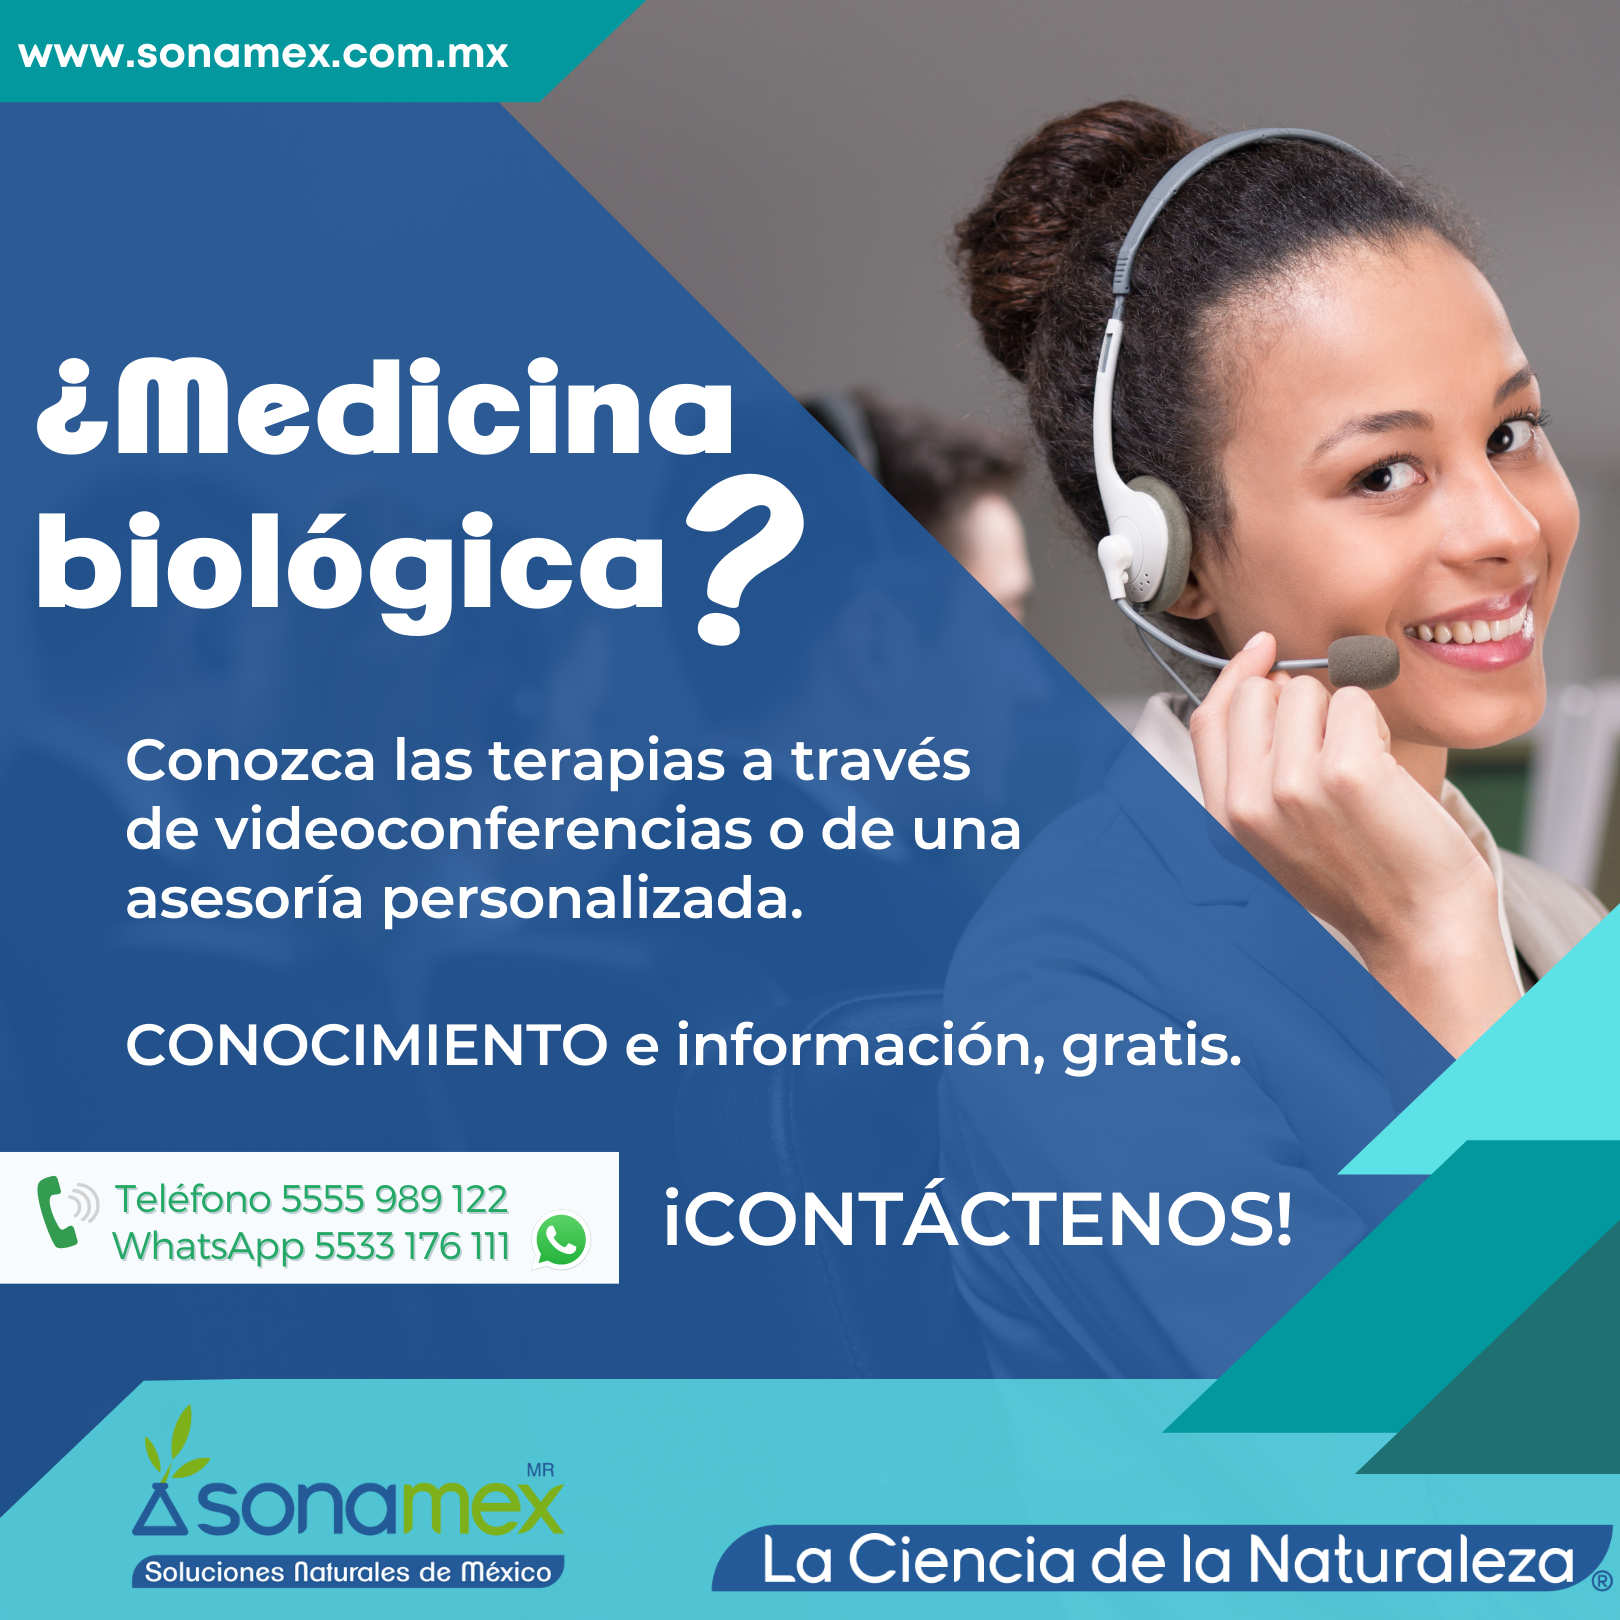 medicina biológica Sonamex 